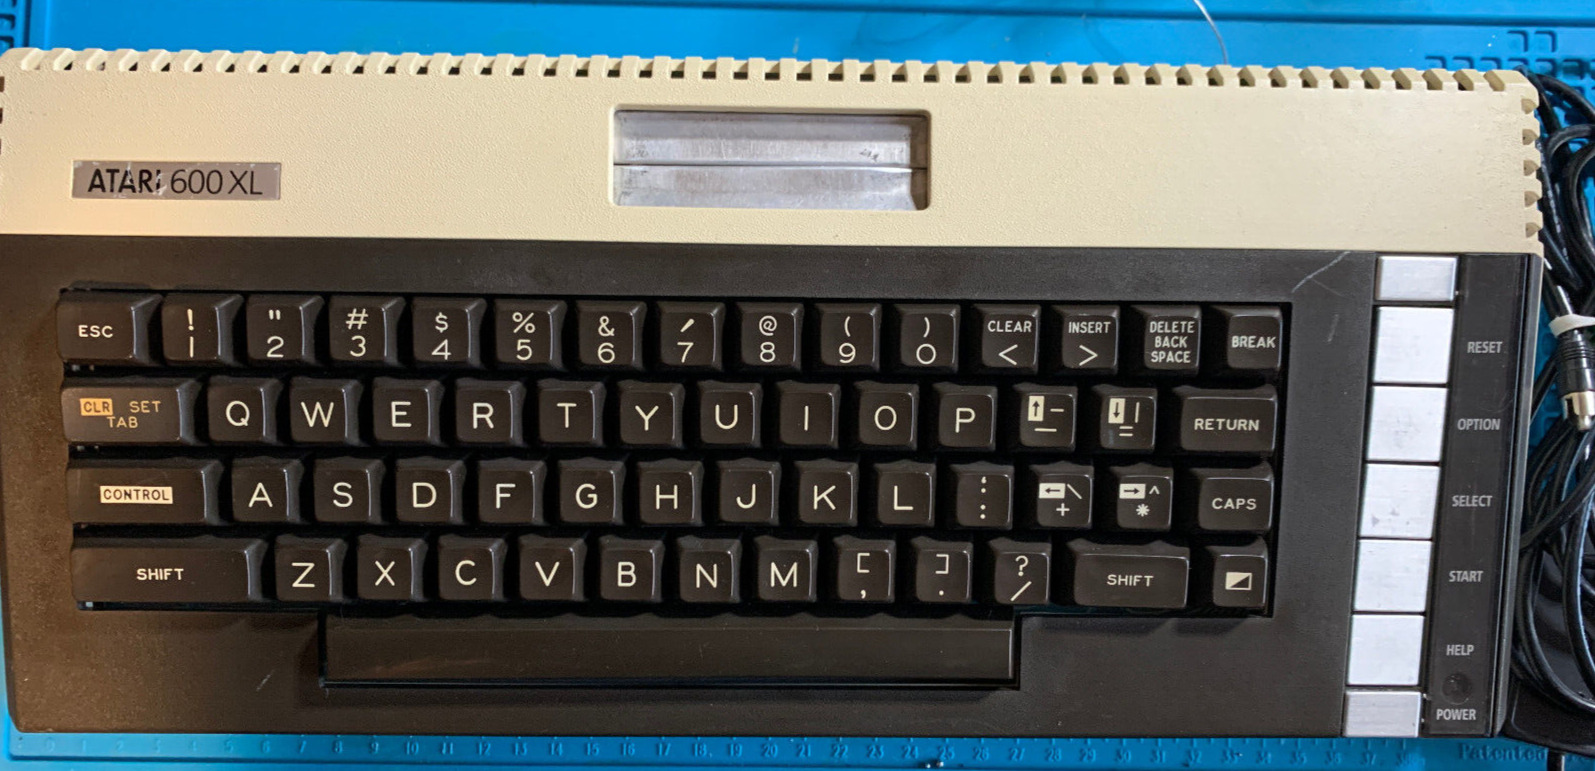 Atari 600XL Home Computer - REFURBISHED Tested and Working